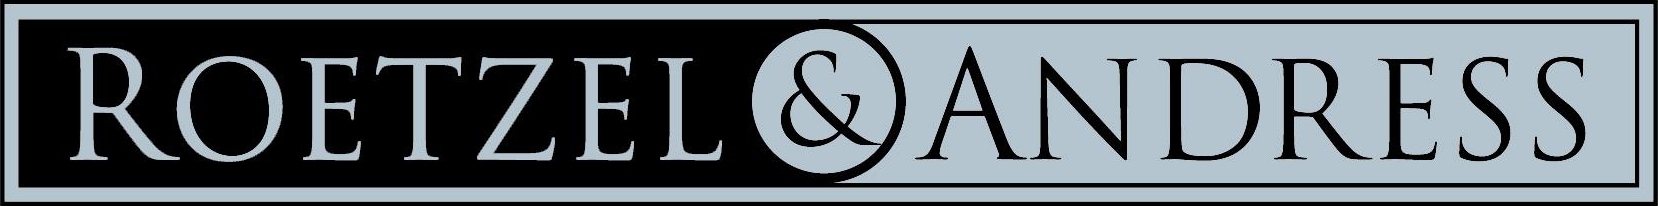 Roetzel & Andress - Cleveland logo